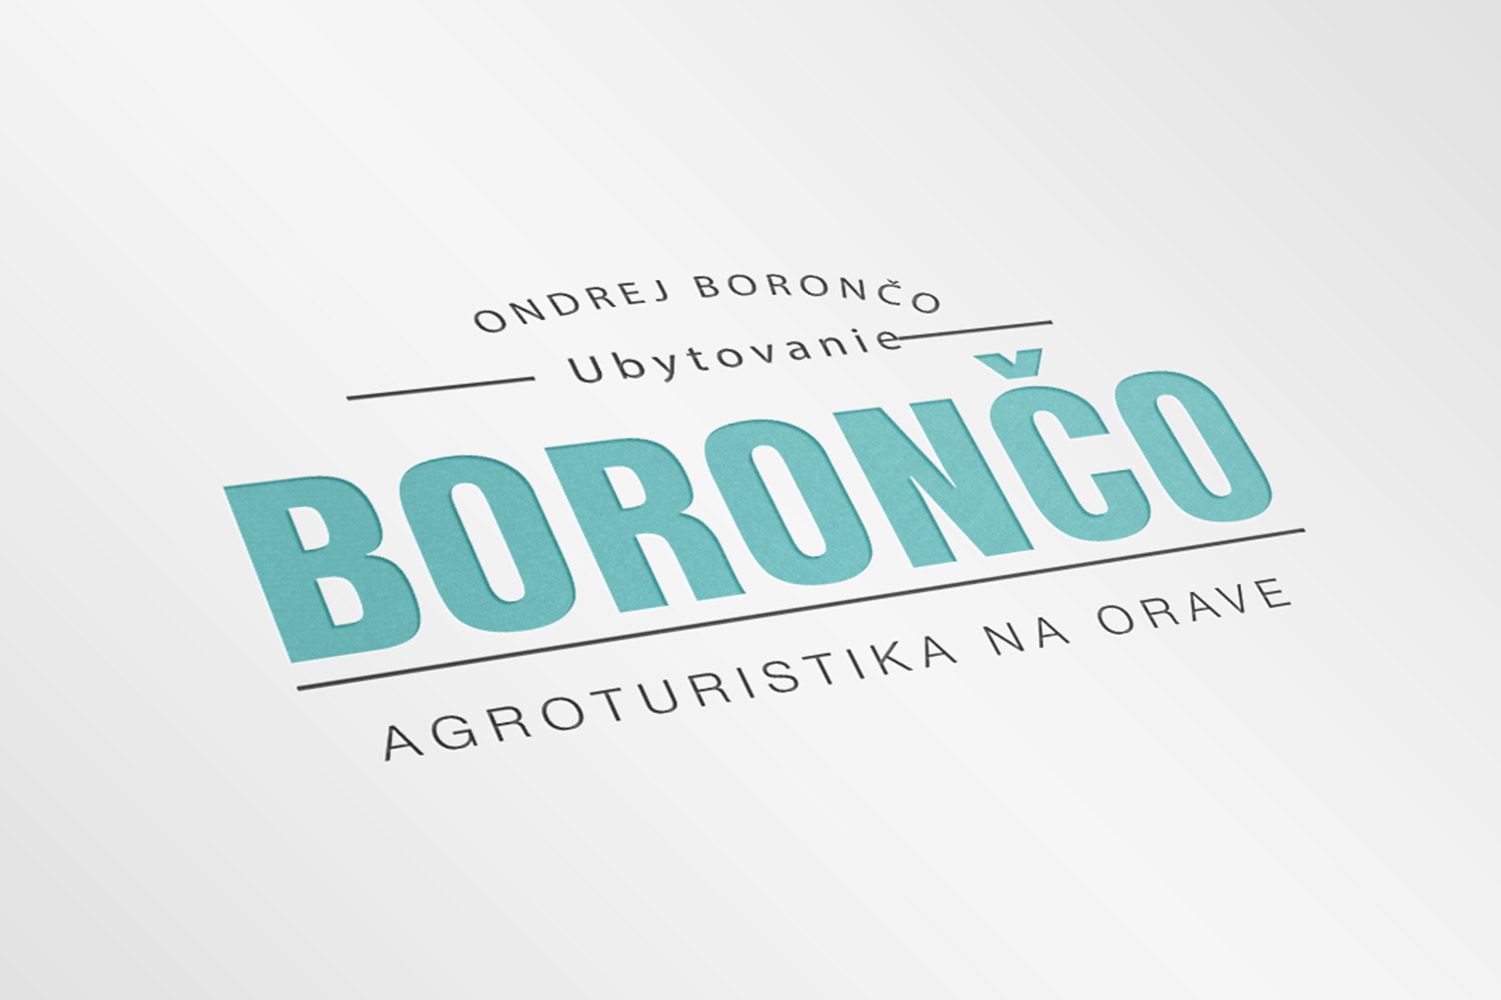 Boronco, logo & web design image